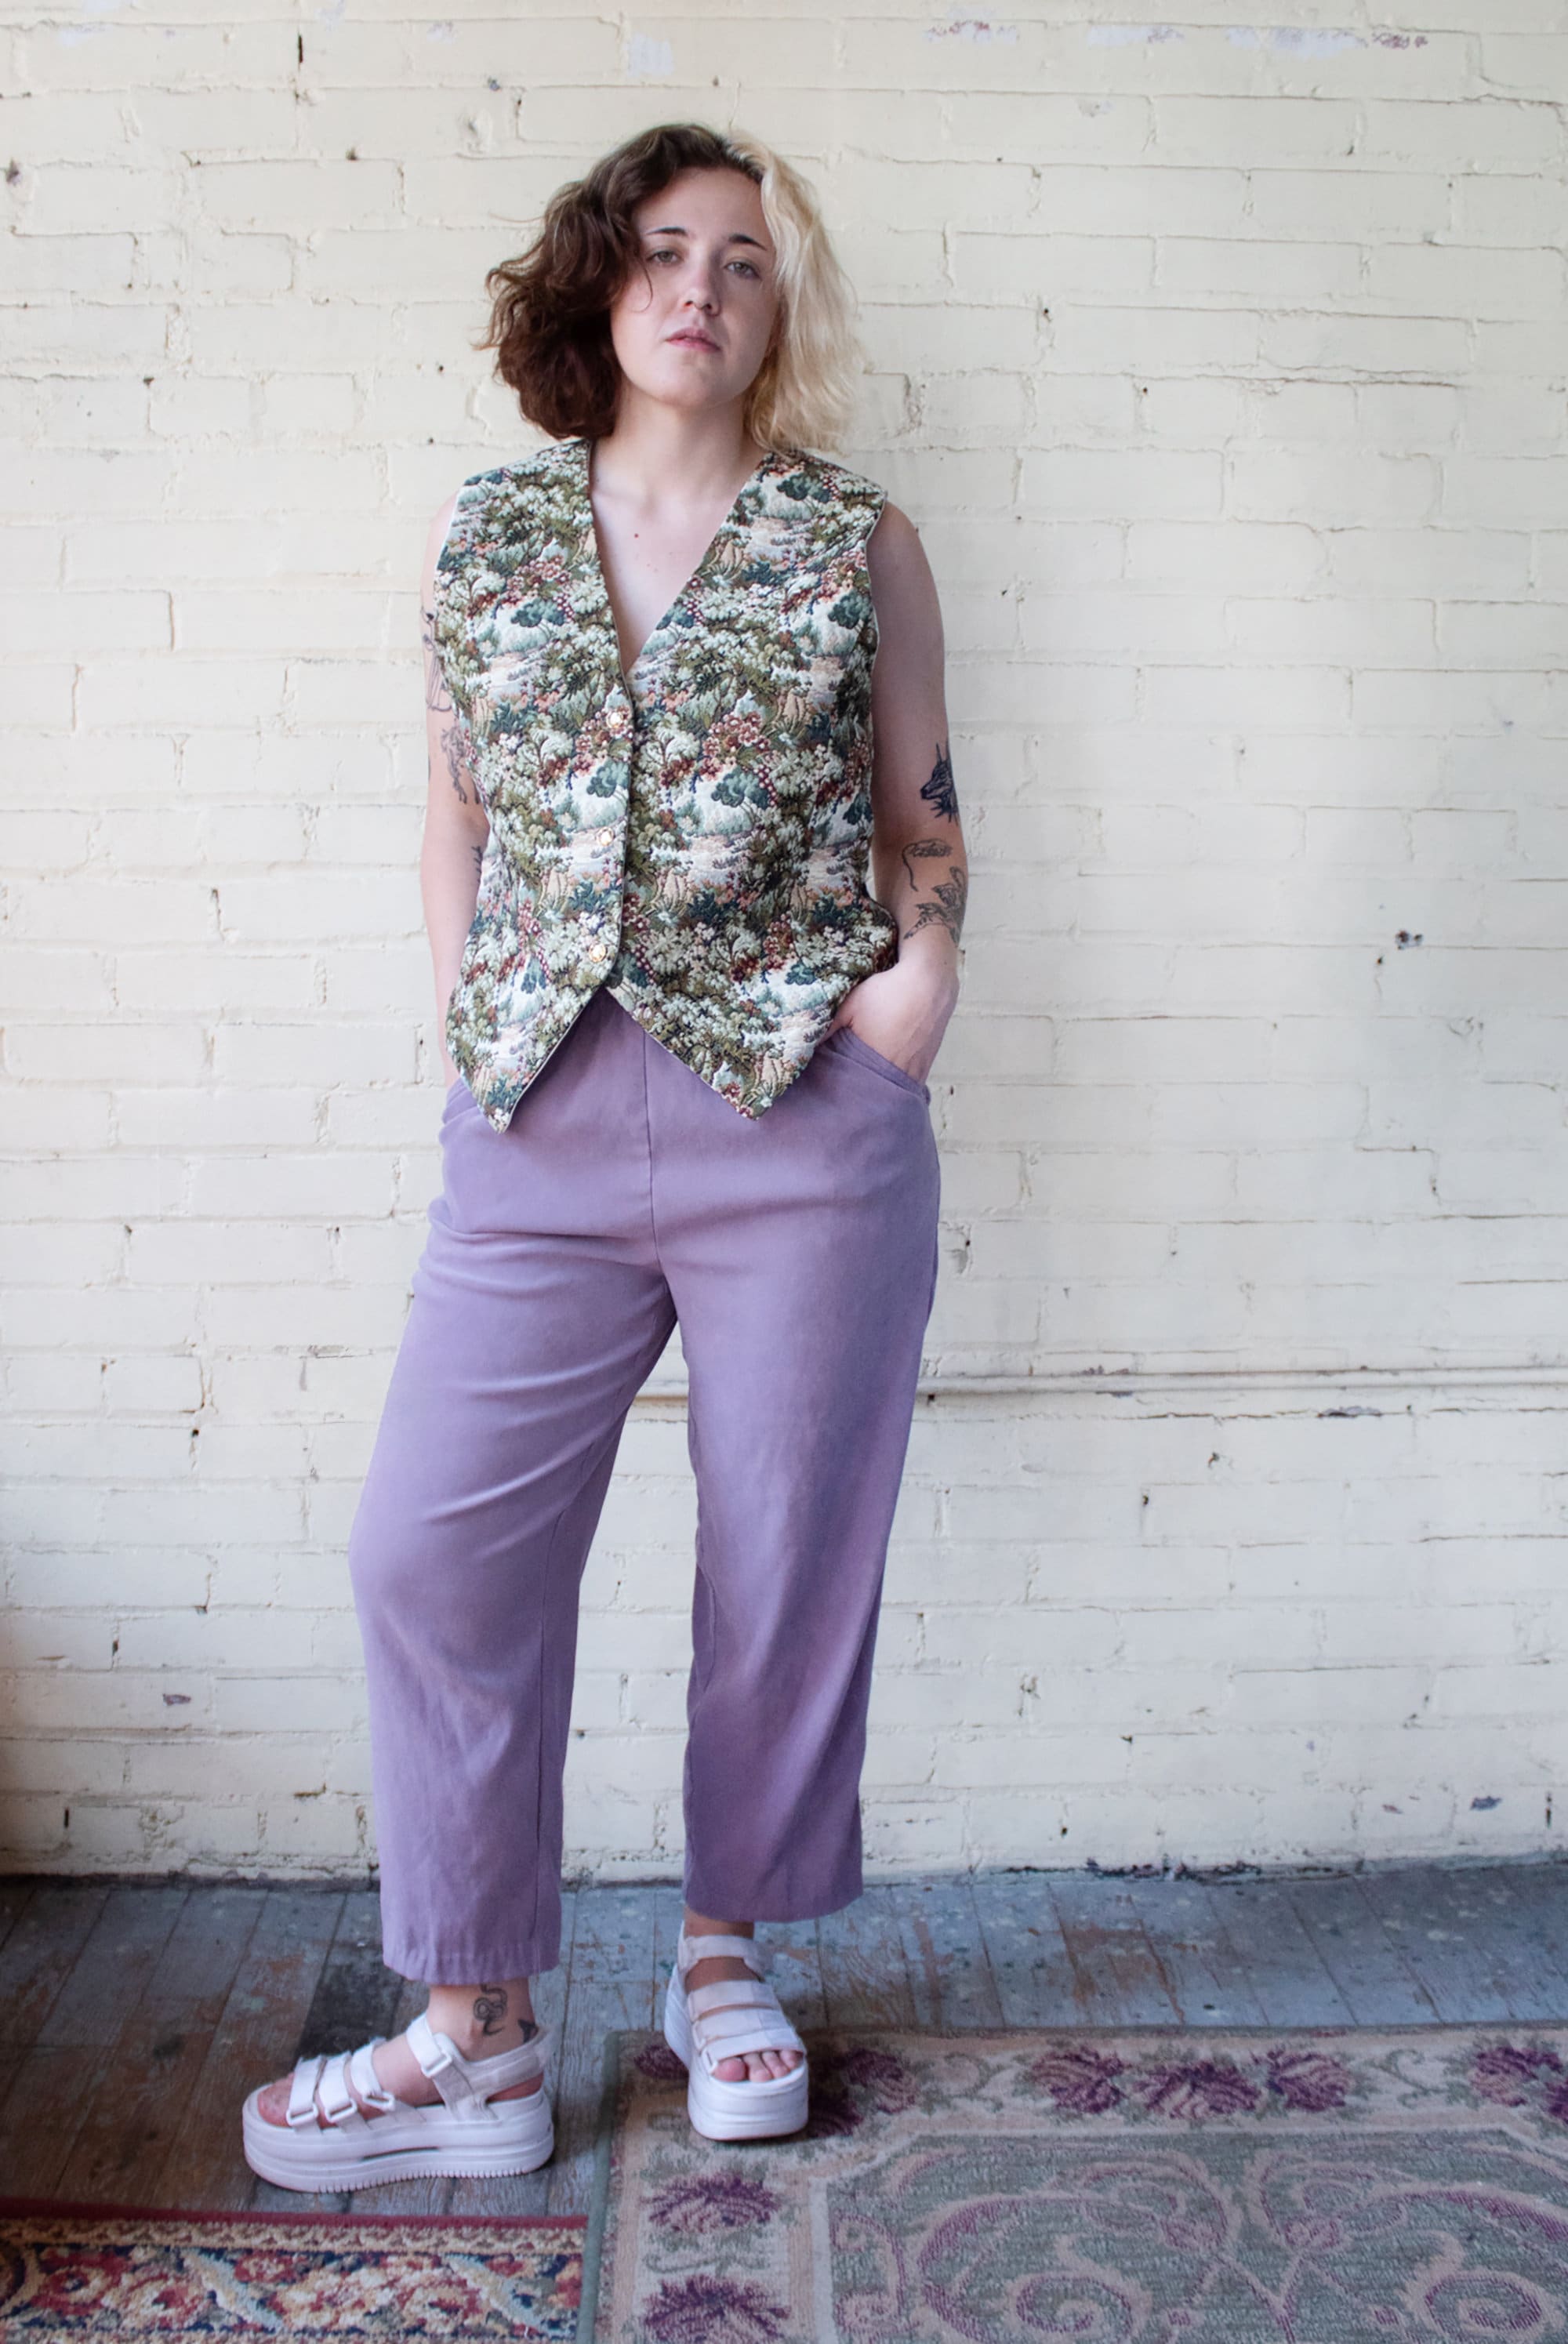 Women's Purple Pants & Trousers - Shop Online Now